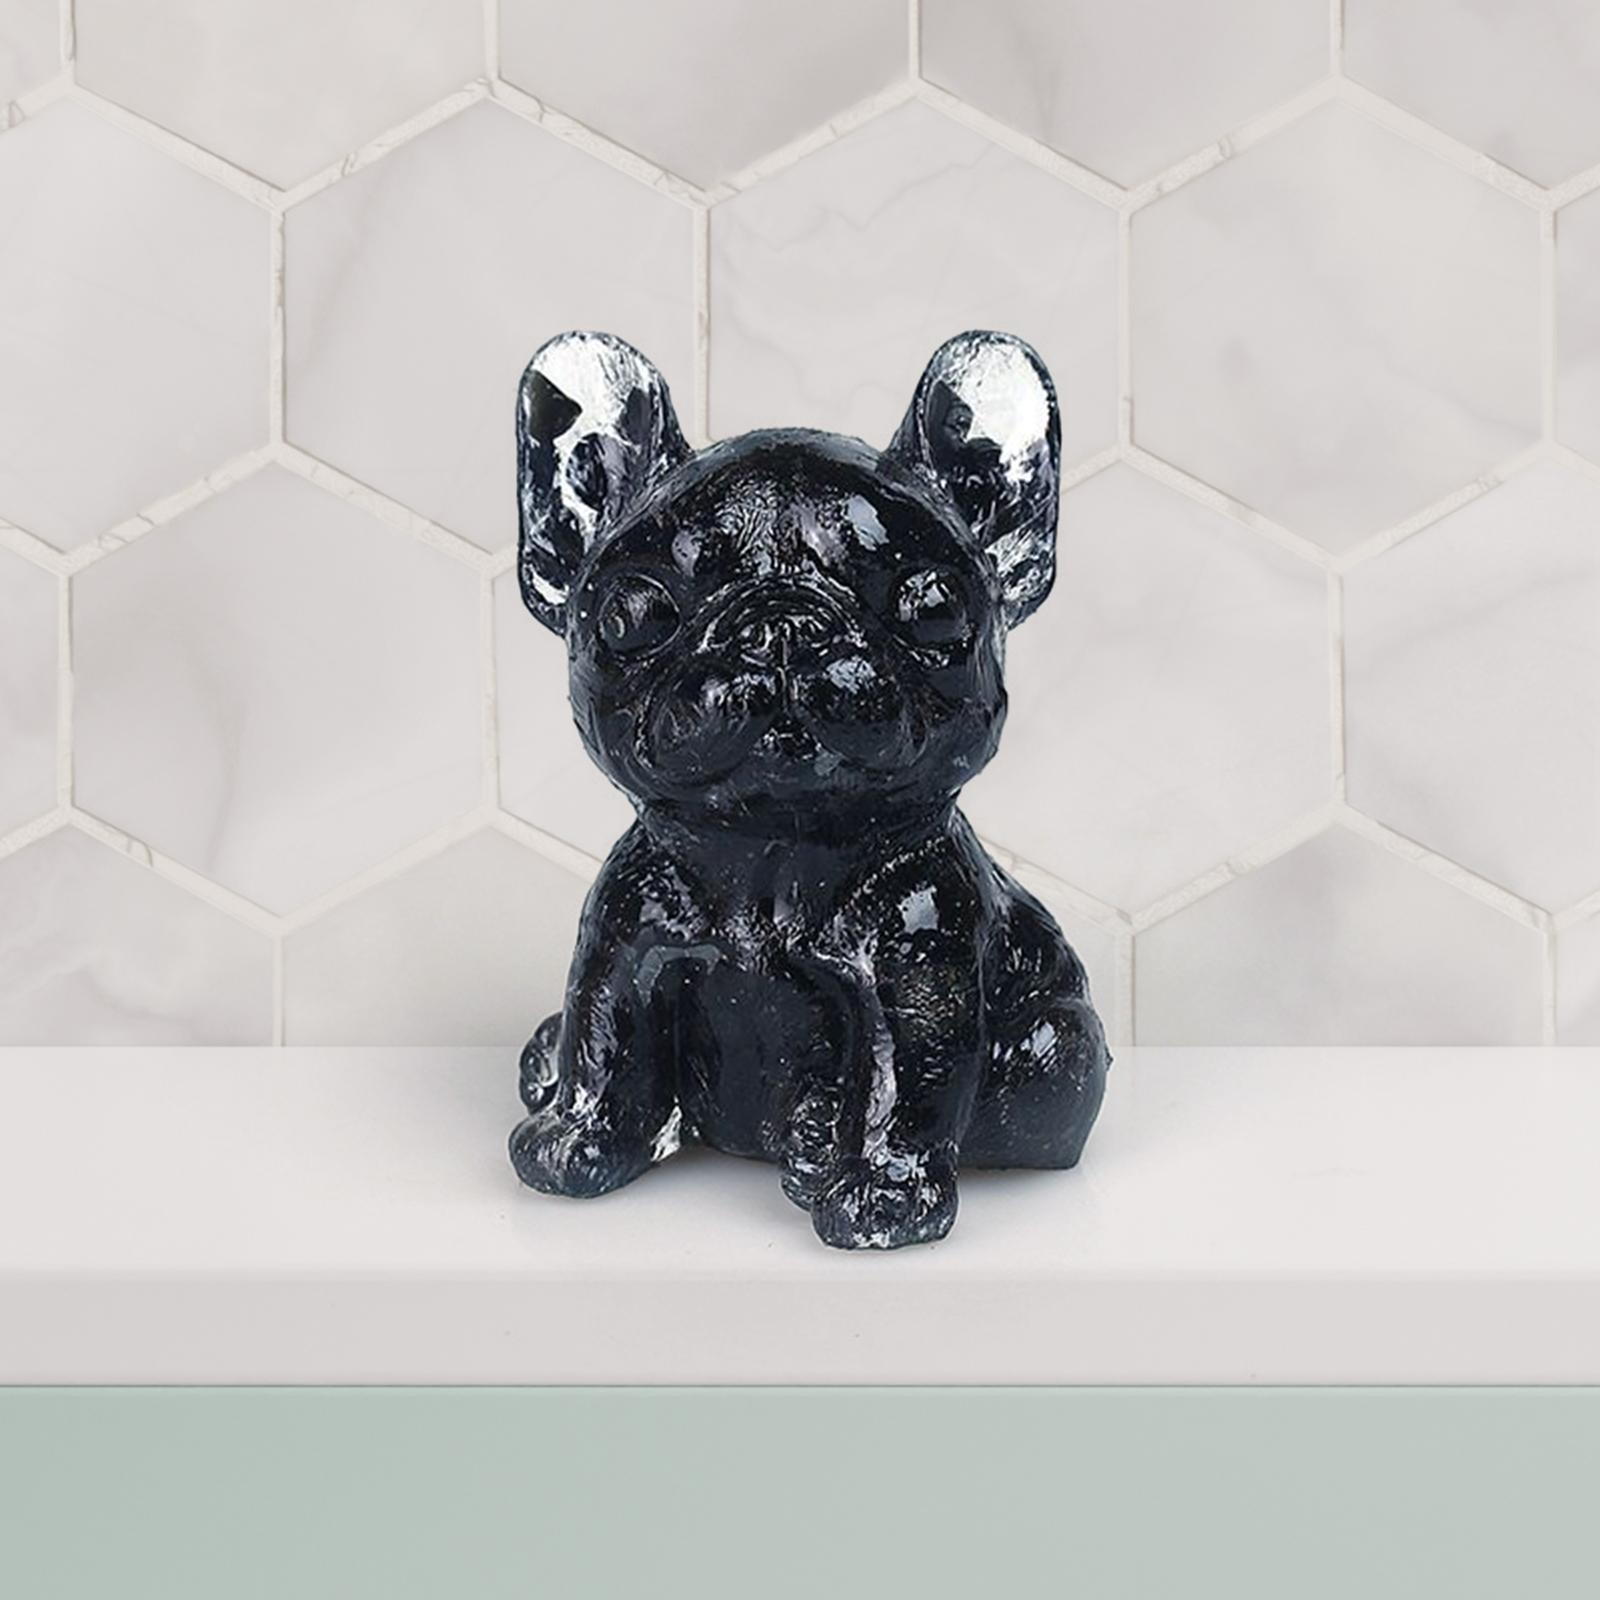 French Bulldog Figurine Ornament Small for Bedroom Desktop Collectible Black